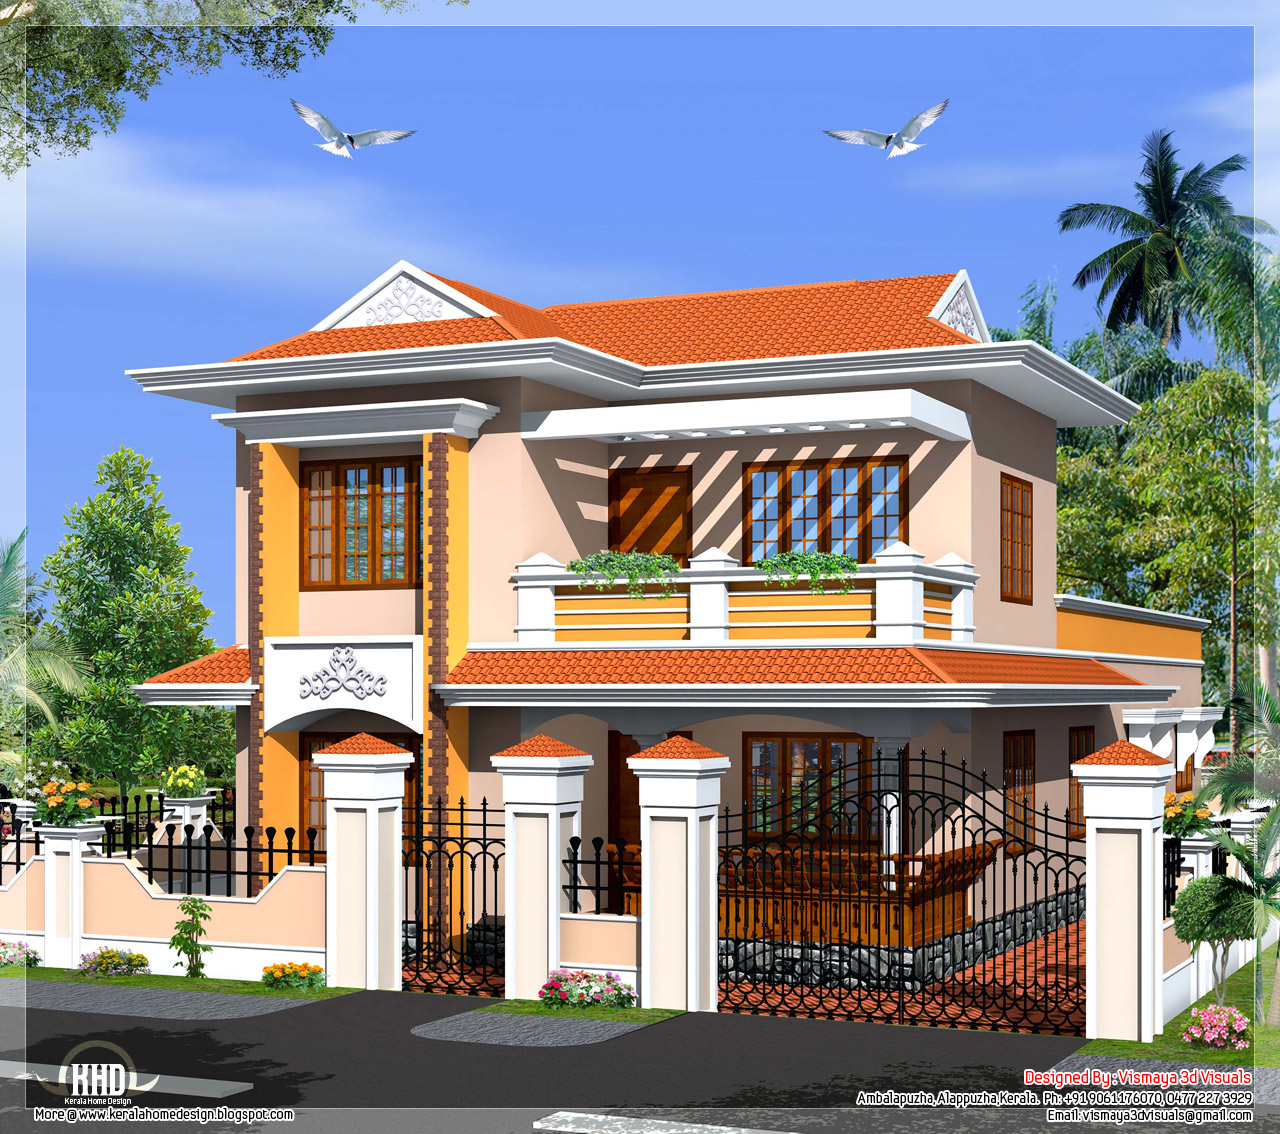  Kerala  model  villa in 2110 in square feet Kerala  home  